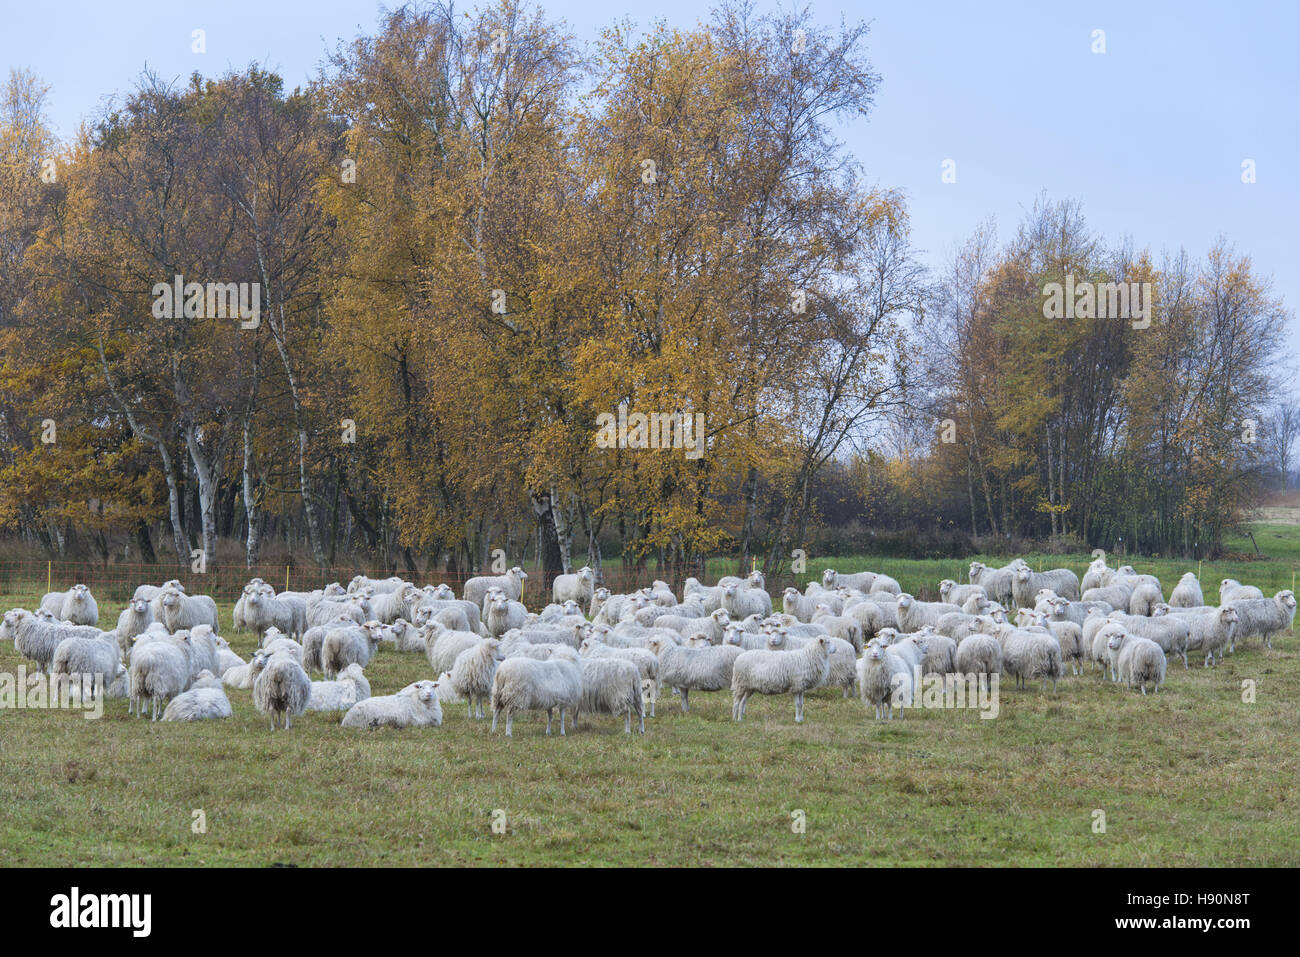 flock of sheep at rehdener geestmoor, oldenburger münsterland, niedersachsen, germany Stock Photo